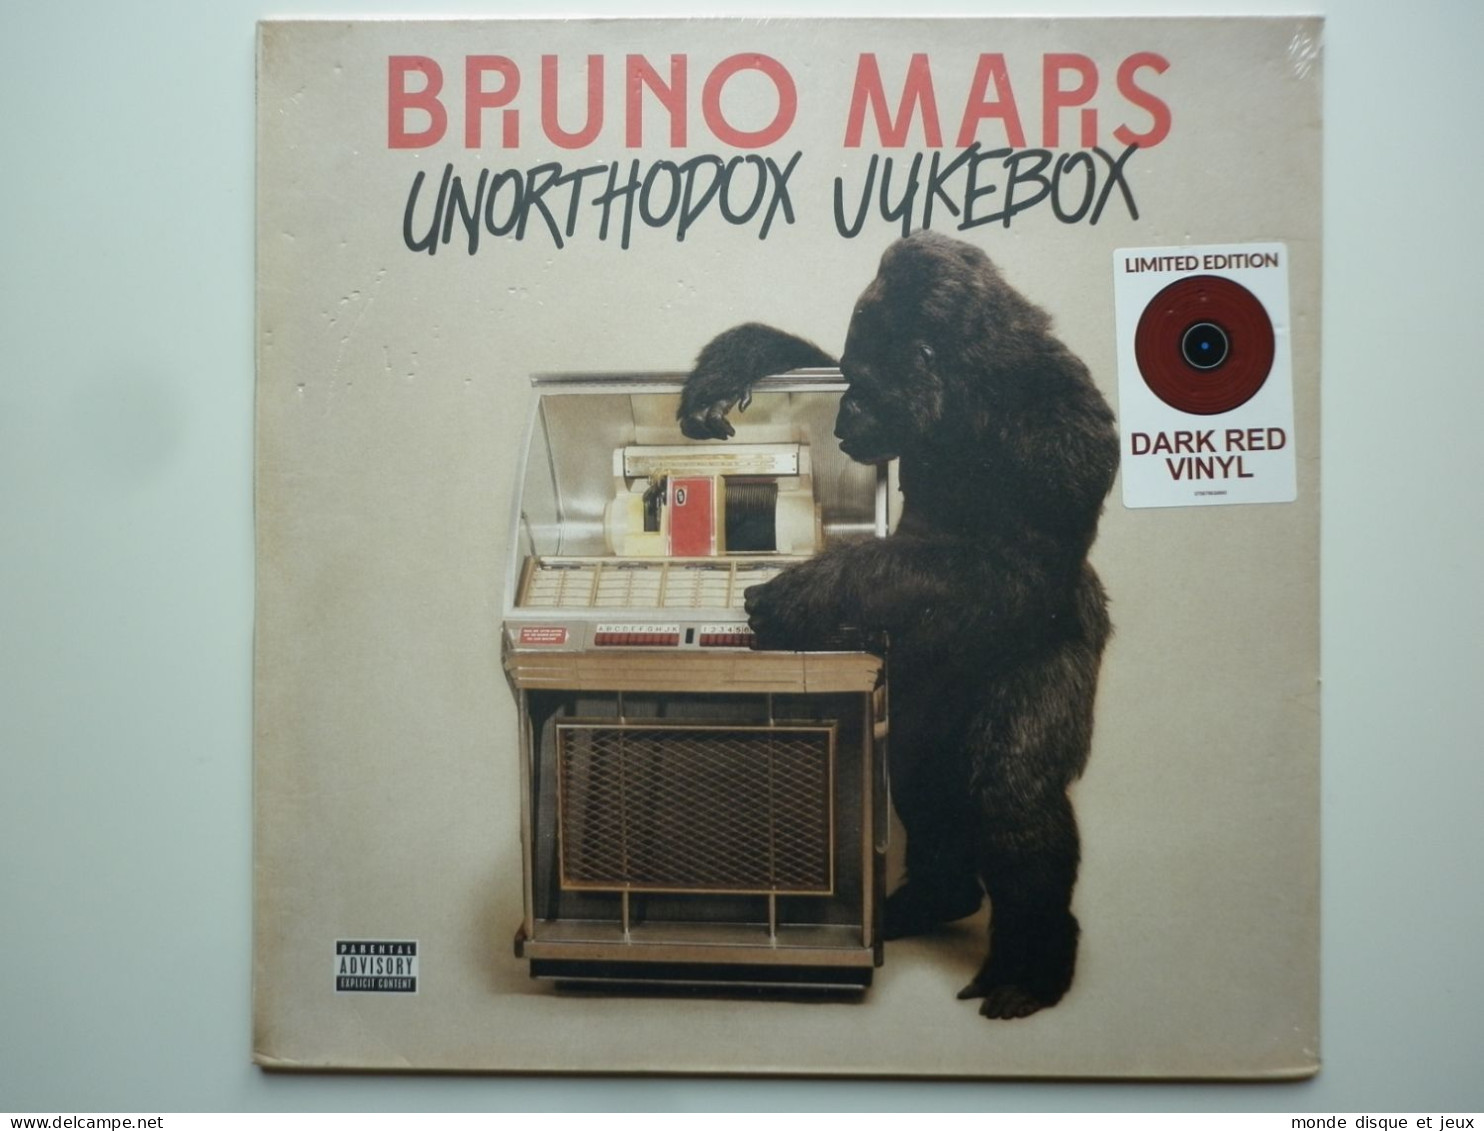 Bruno Mars Album 33Tours Vinyle Unorthodox Jukebox Couleur Rouge / Red - Sonstige - Franz. Chansons